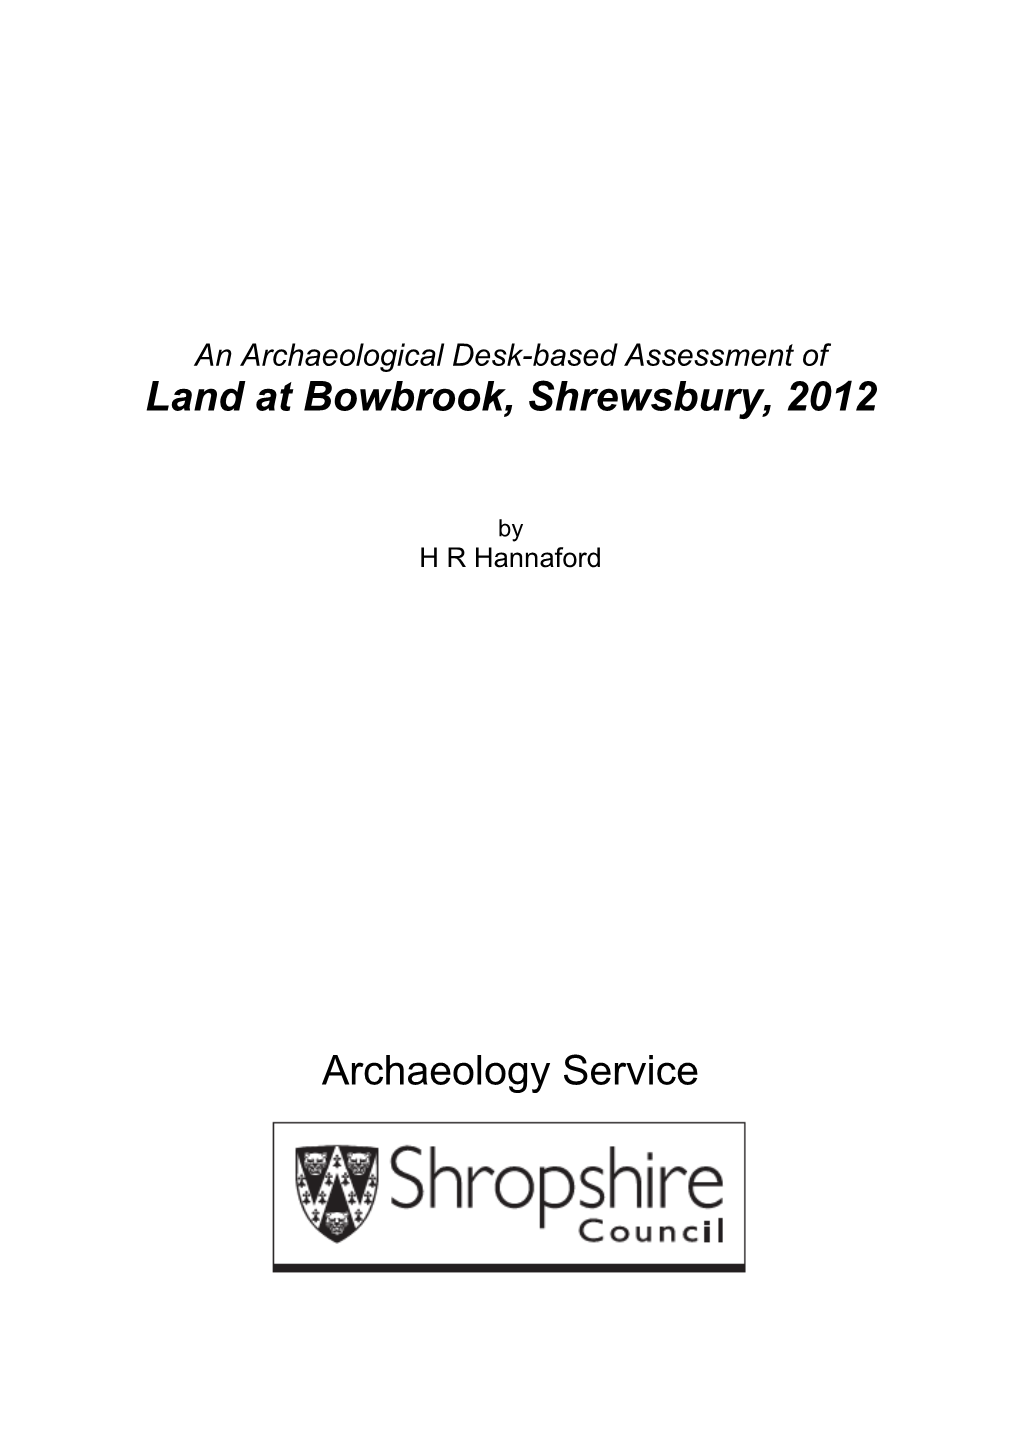 An Archaeological Desk-Based Assessment of Land at Bowbrook, Shrewsbury, 2012